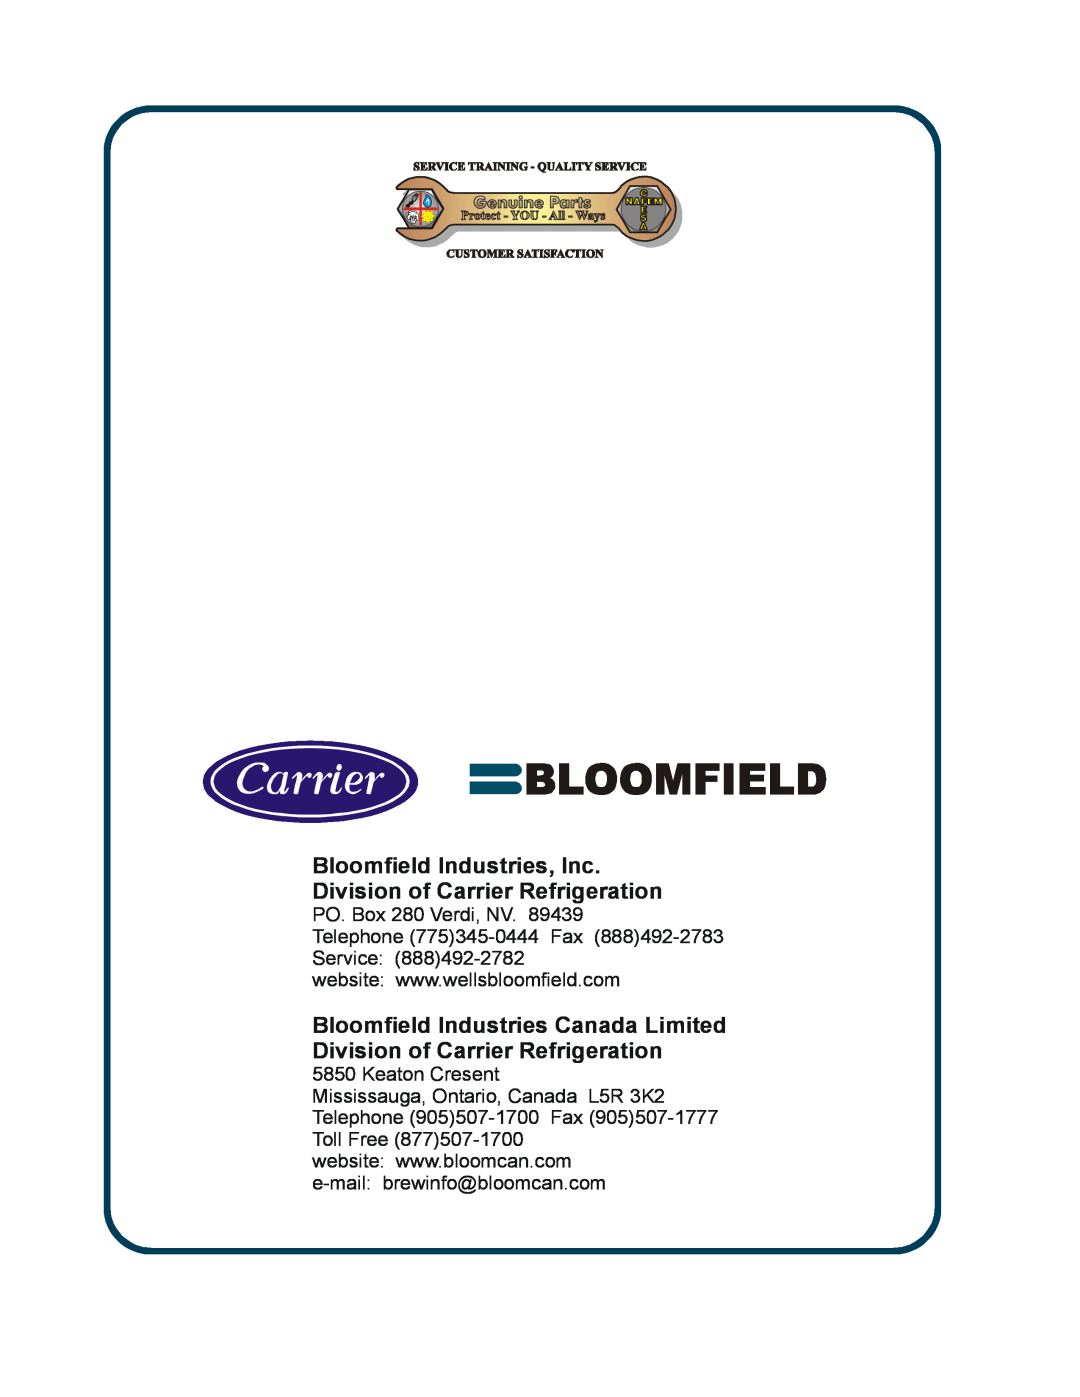 Bloomfield 8748 manual PO. Box 280 Verdi, NV, Telephone 775345-0444Fax 888492-2783Service, Keaton Cresent 